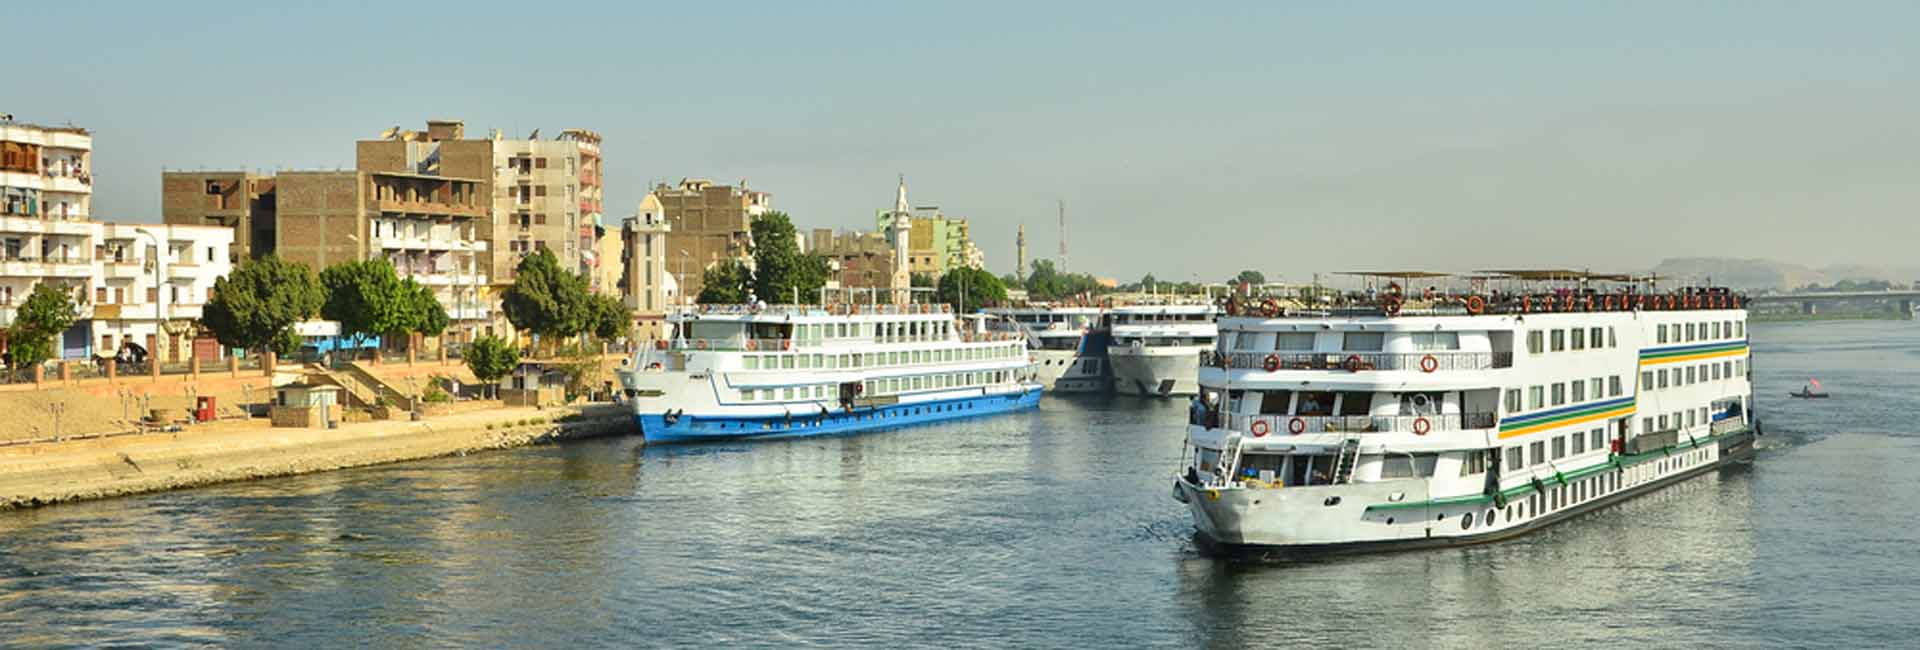 Nile Cruise from Aswan